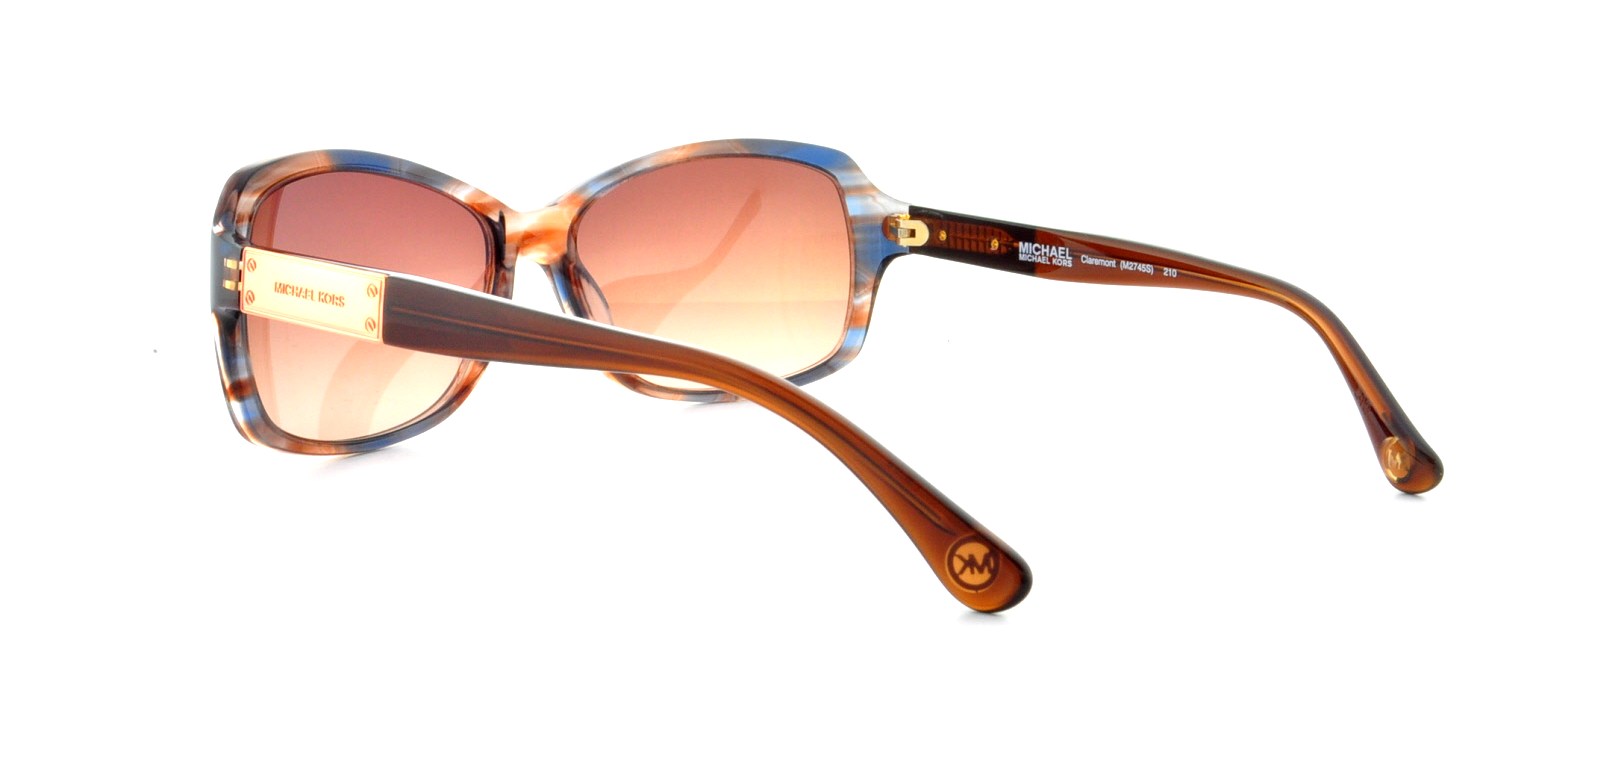 Designer Frames Outlet. Michael Kors Sunglasses M2745S CLAREMONT